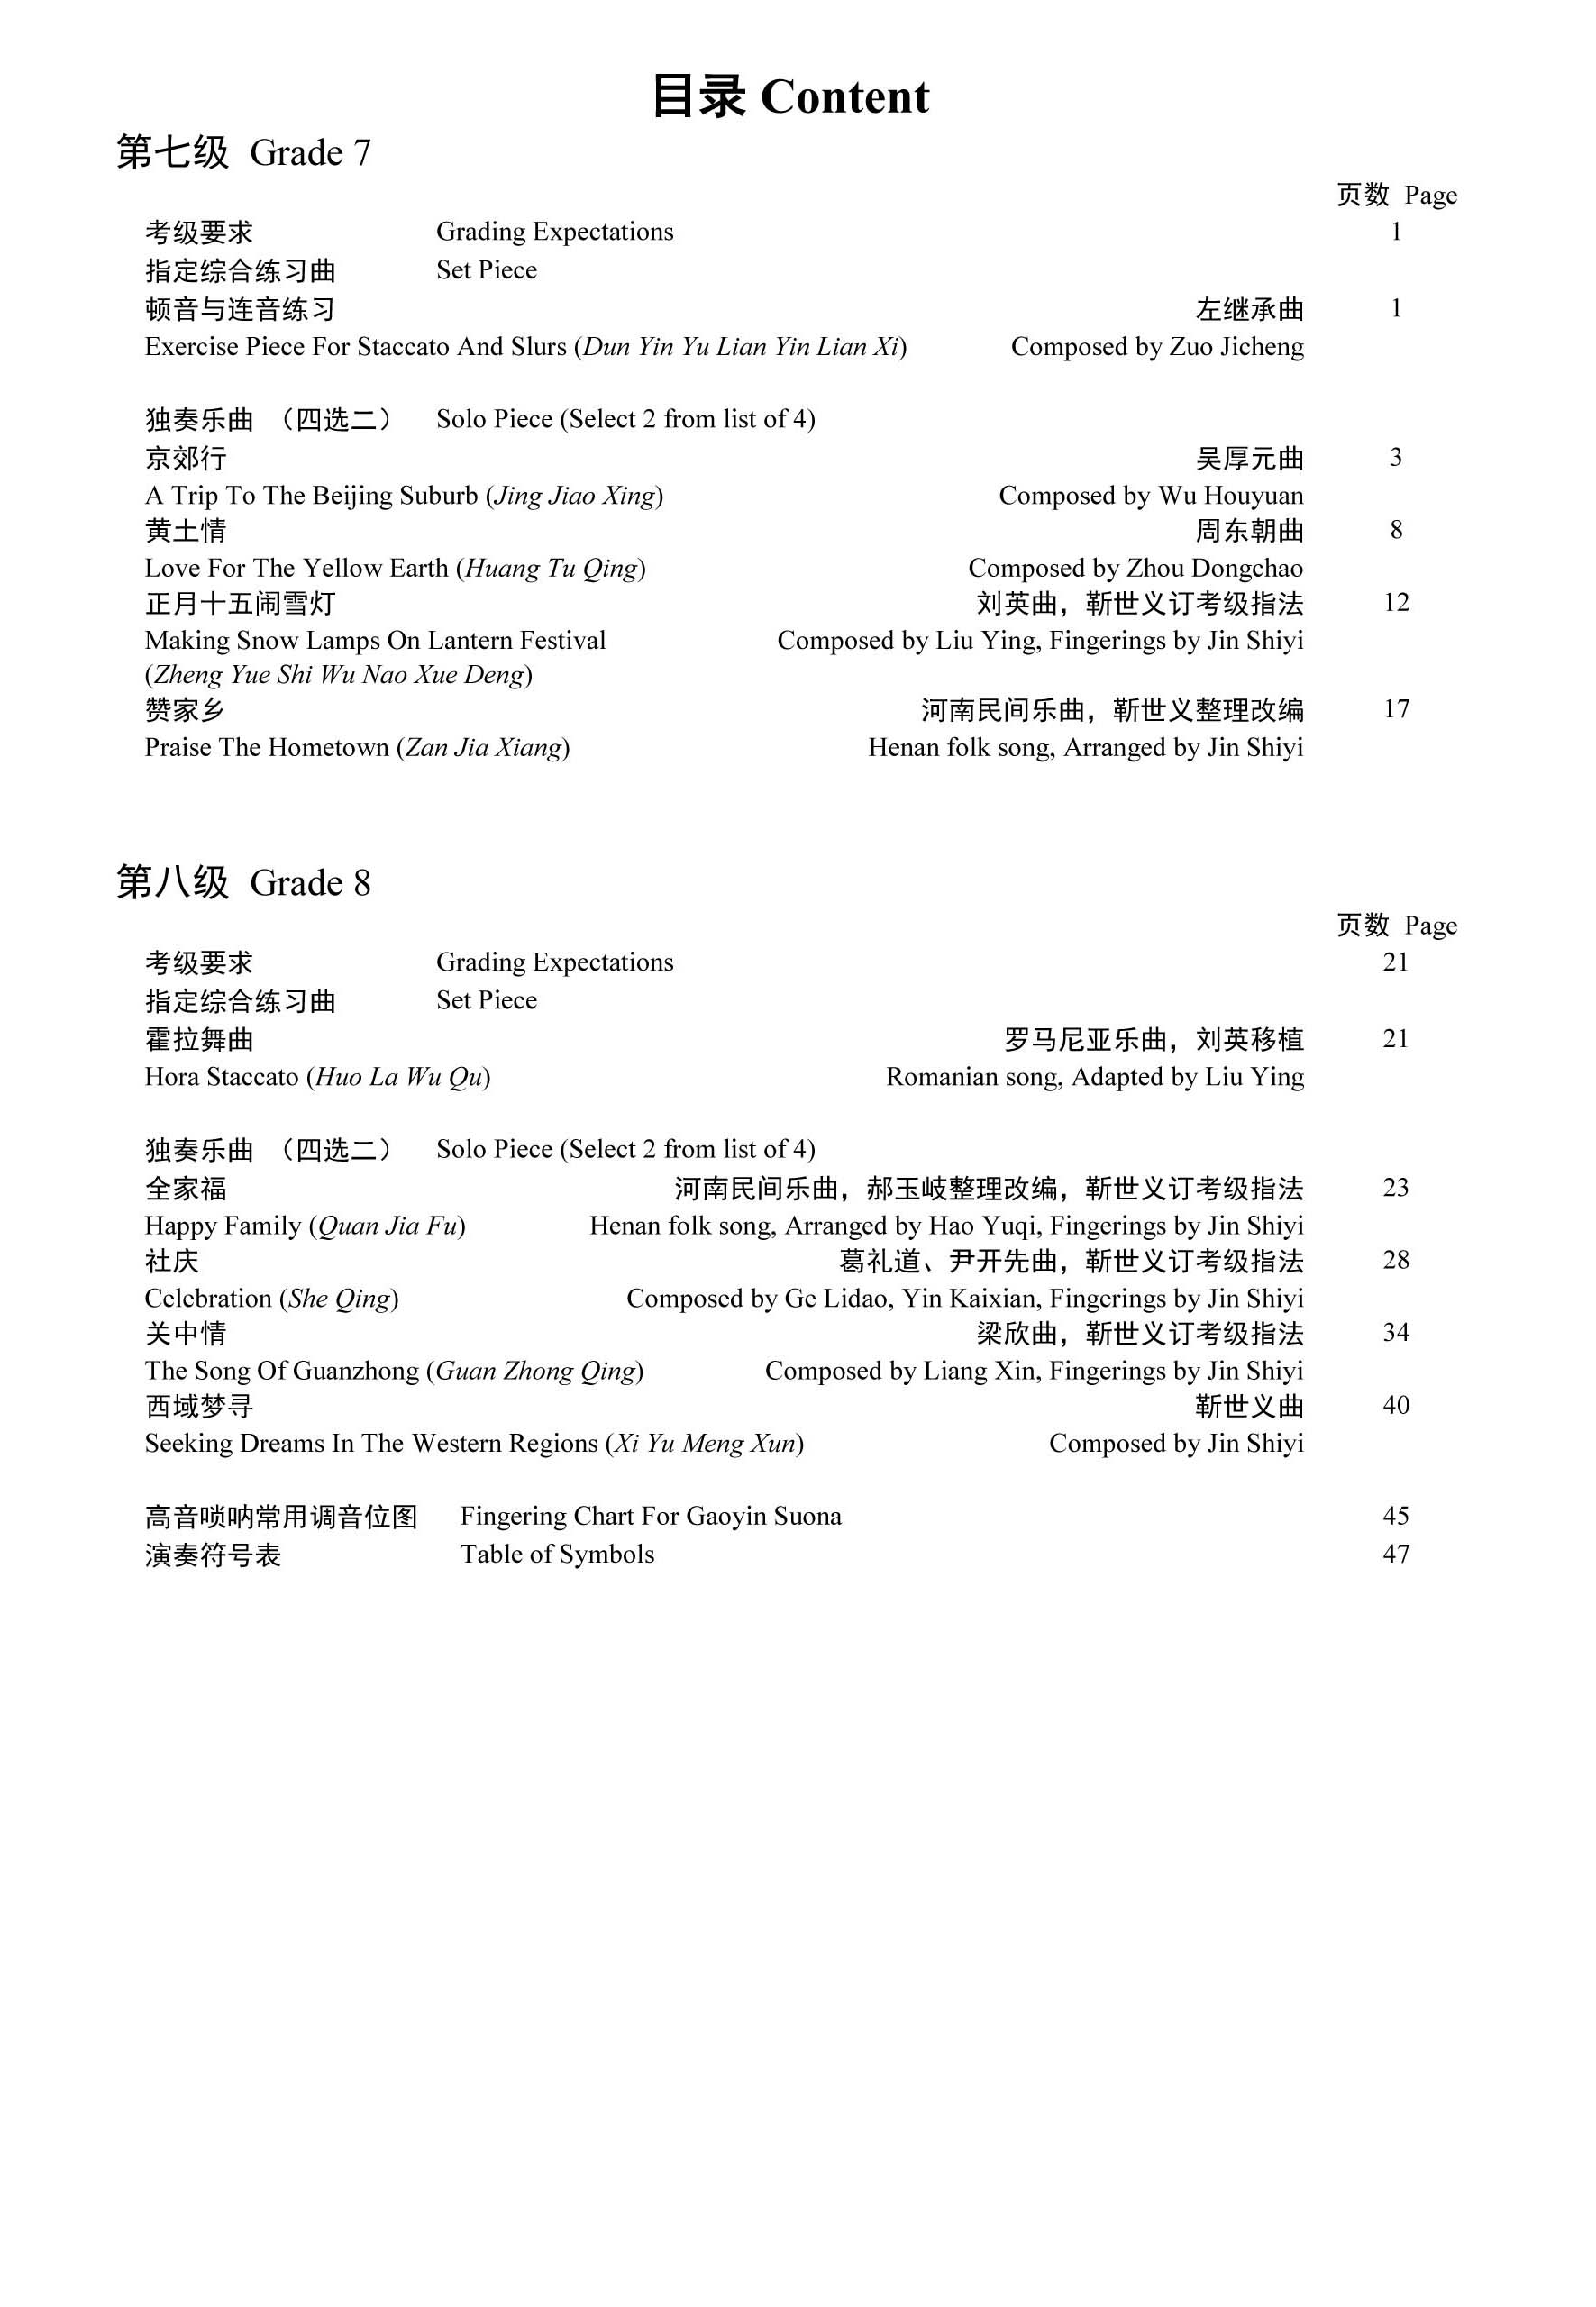 Gaoyin Suona Grading Examination Book by Teng (Intermediate Grade 7-8) Content Page